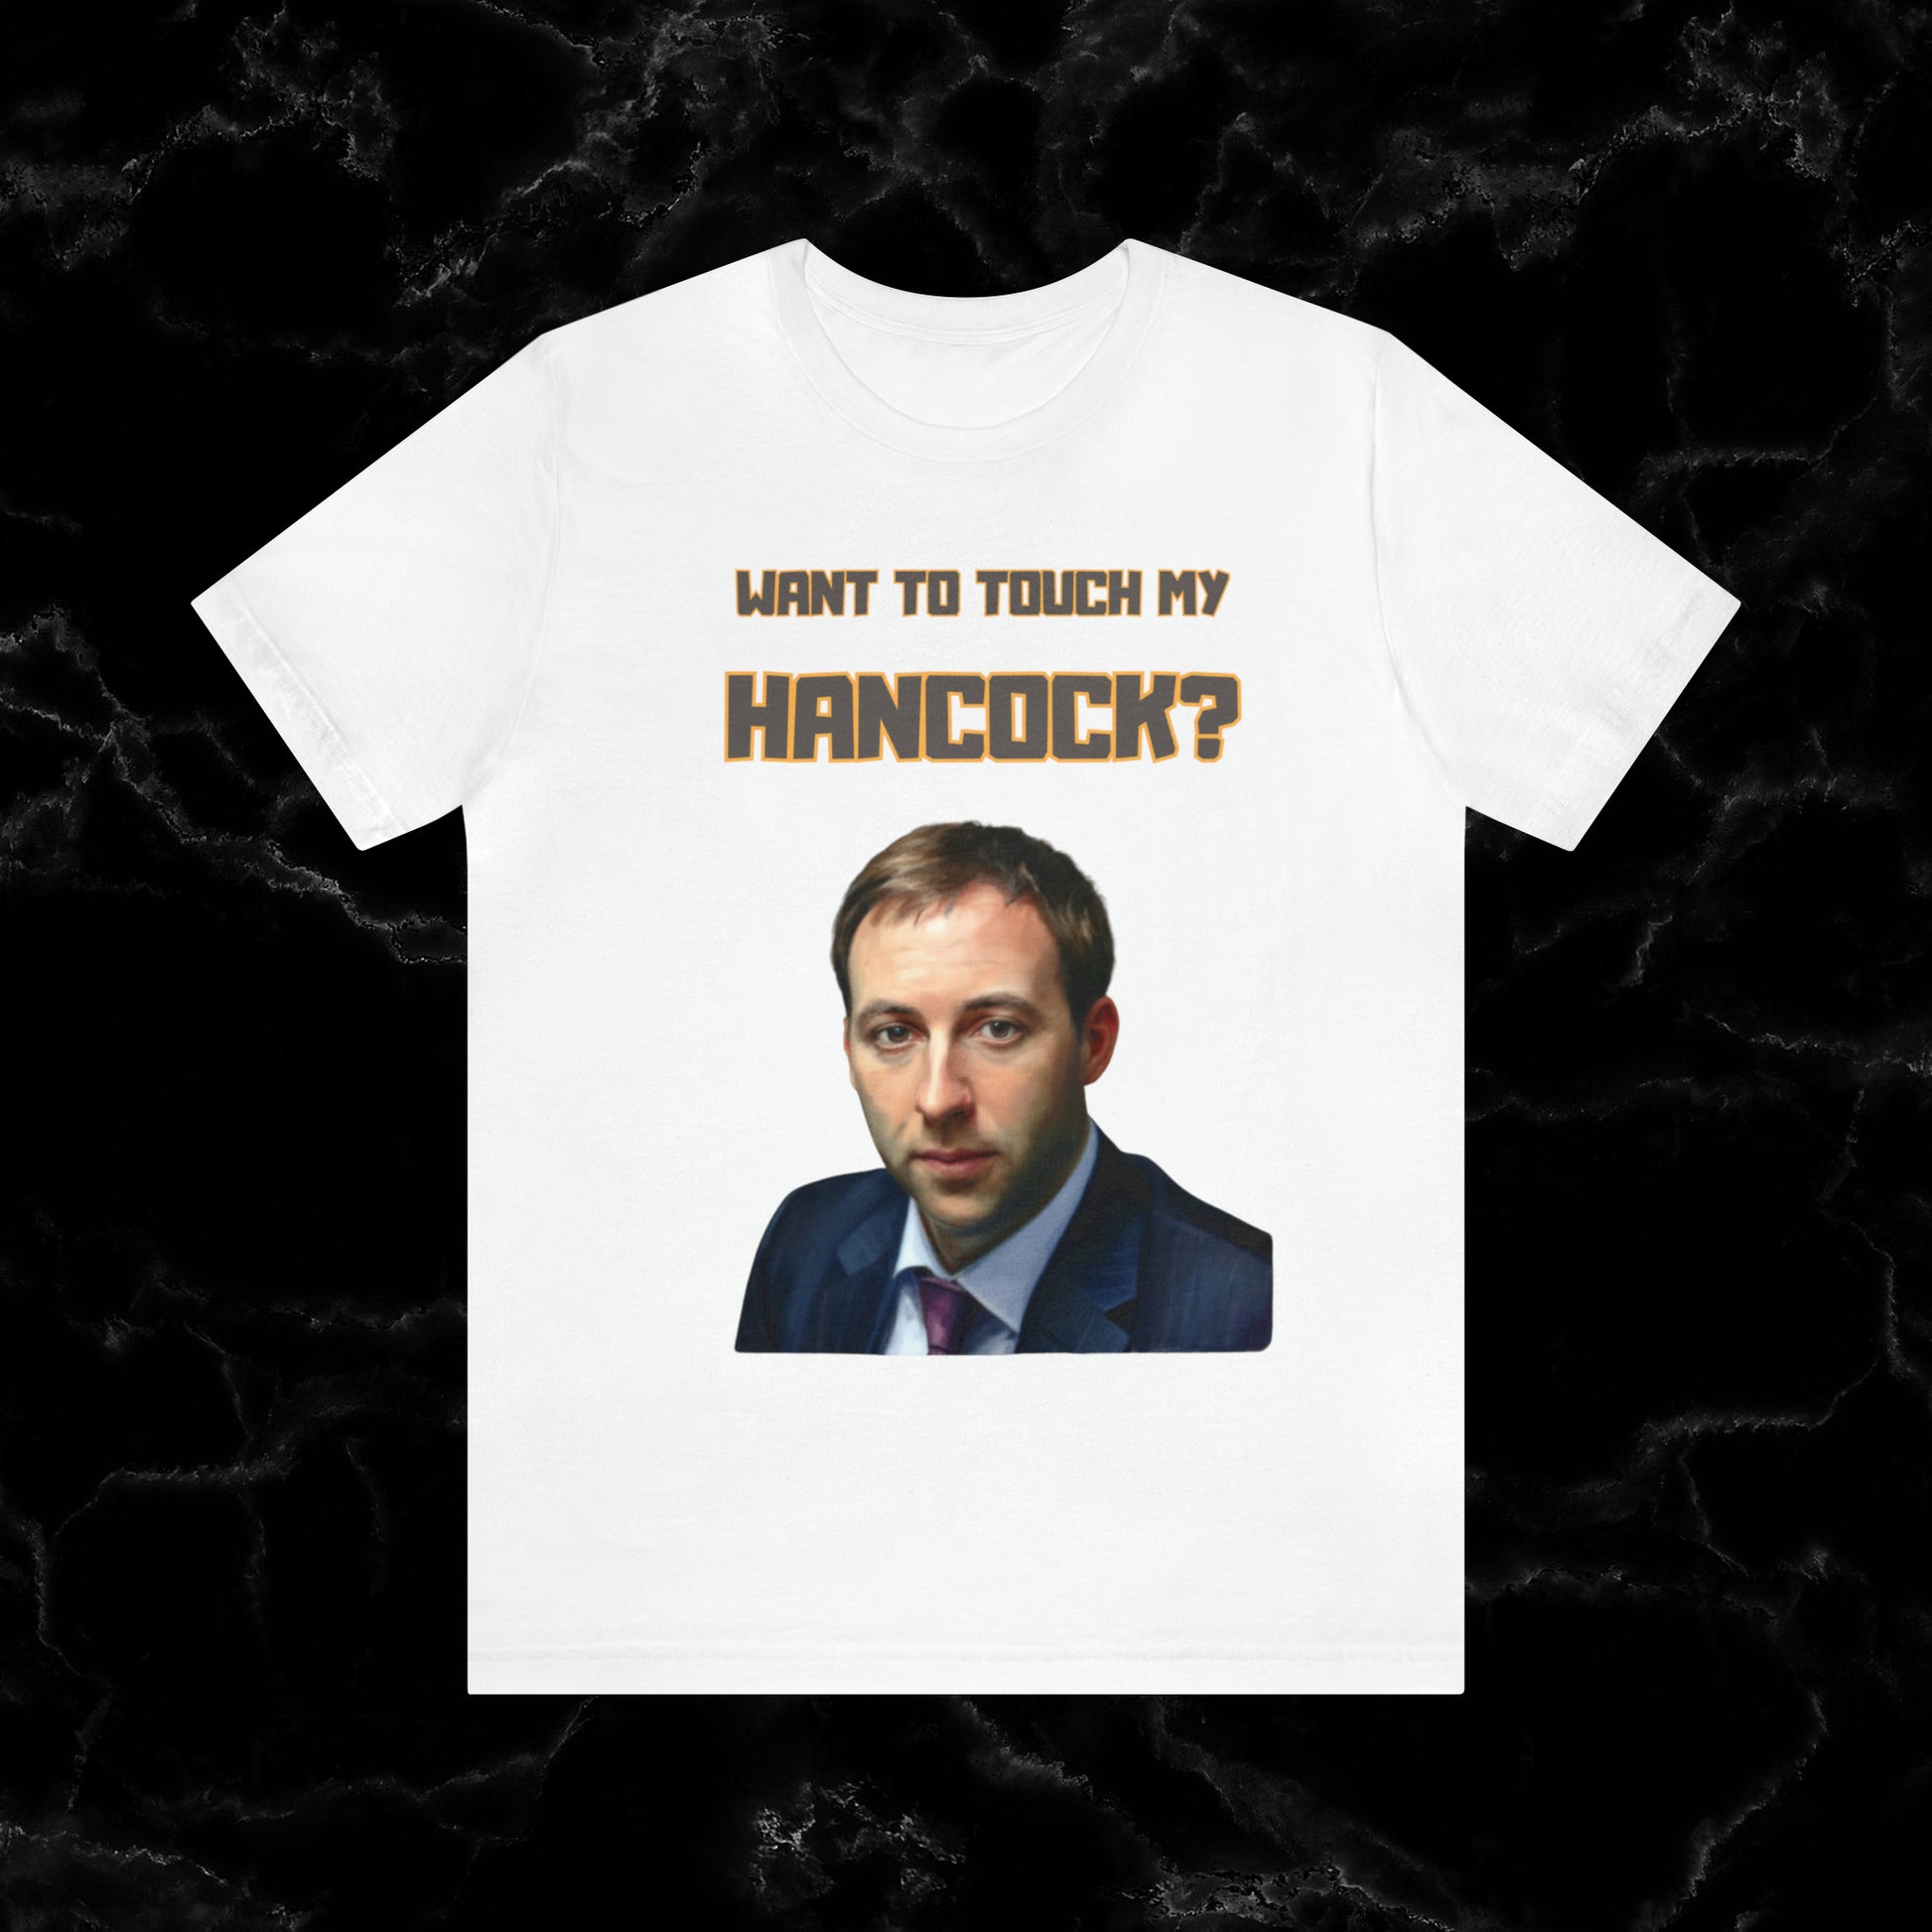 Want To Touch My Hancock T-shirt - Matt Hancock Funny Tee T-Shirt White S 